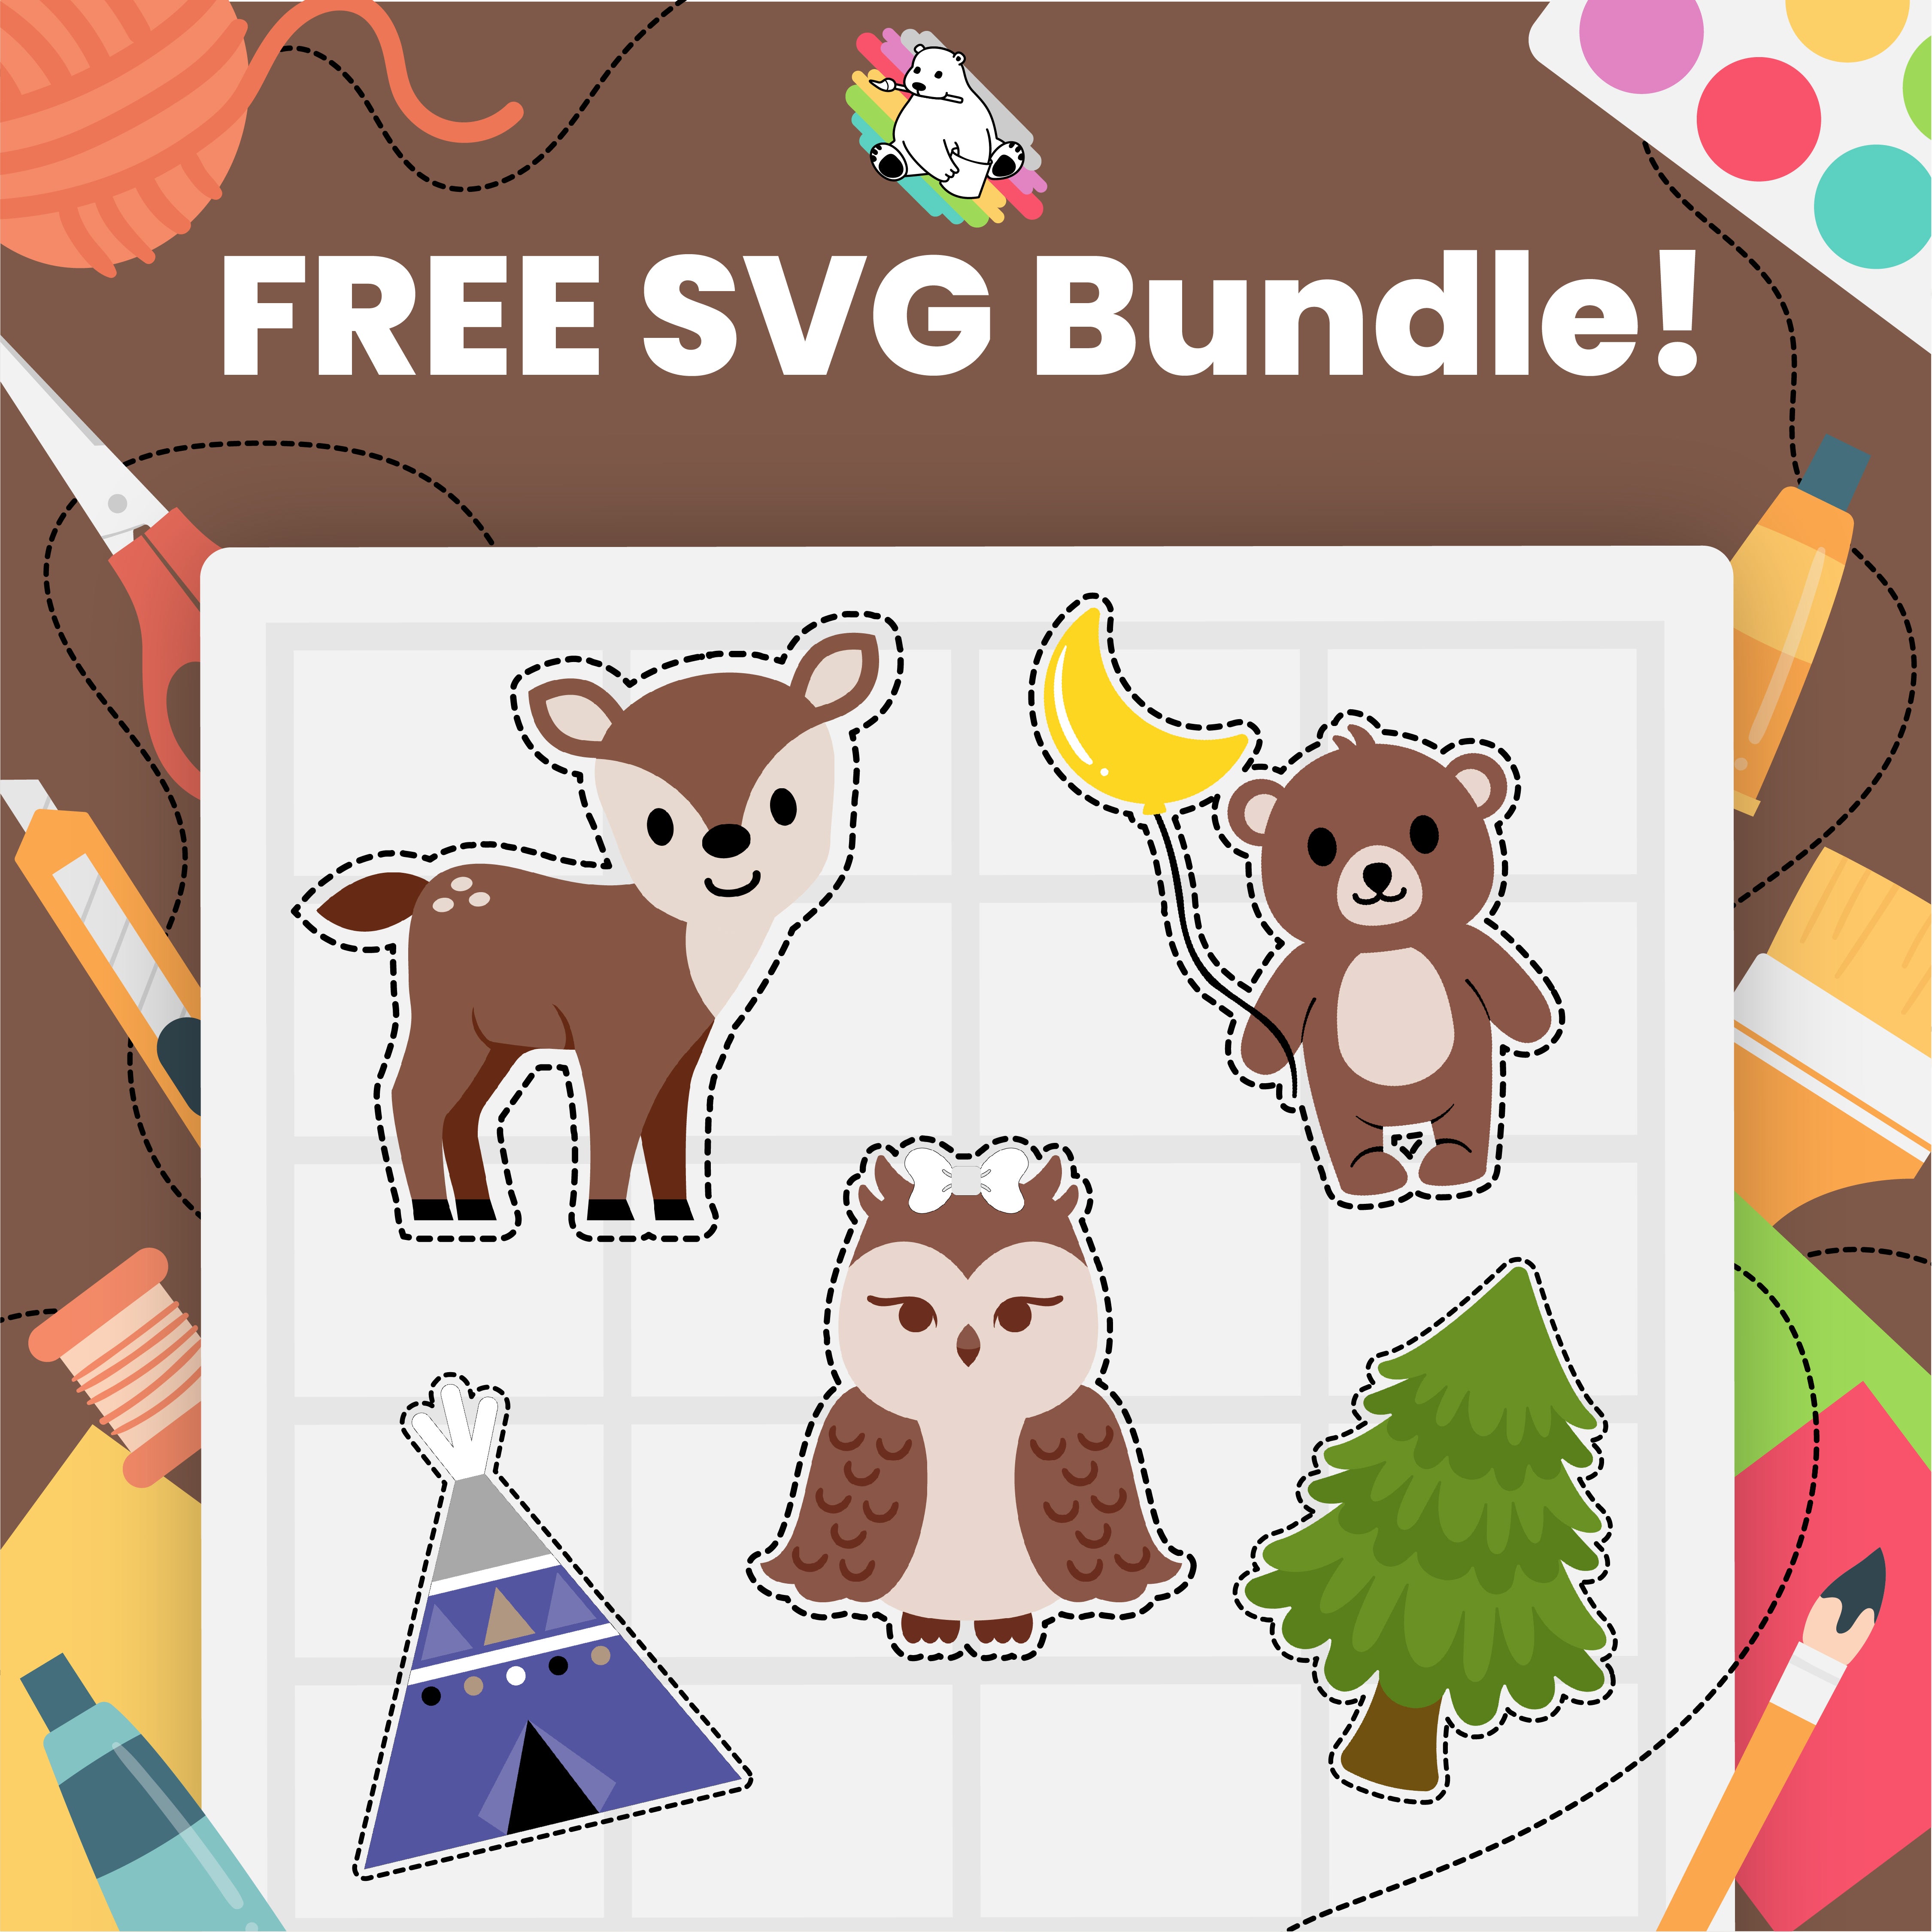 Bearly Stars free SVG bundle: deer svg, bear holding the moon svg, owl svg, tee pee tent svg, pine tree svg